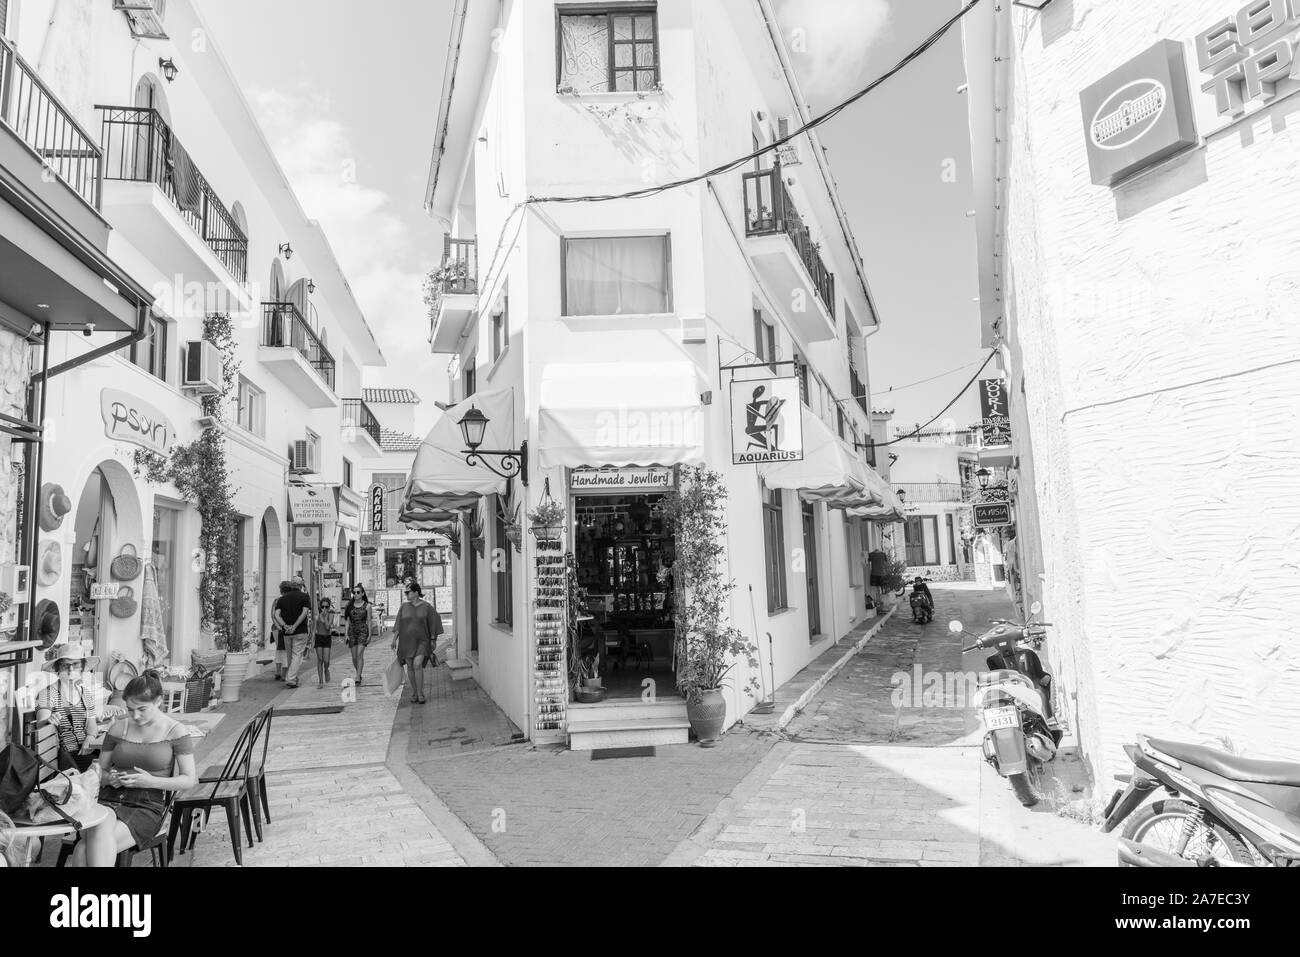 Skiatthos Greece - July 31 2019; Skiathos street scene in monochrome. with people breakfasting and walking along narrow lanes. Stock Photo